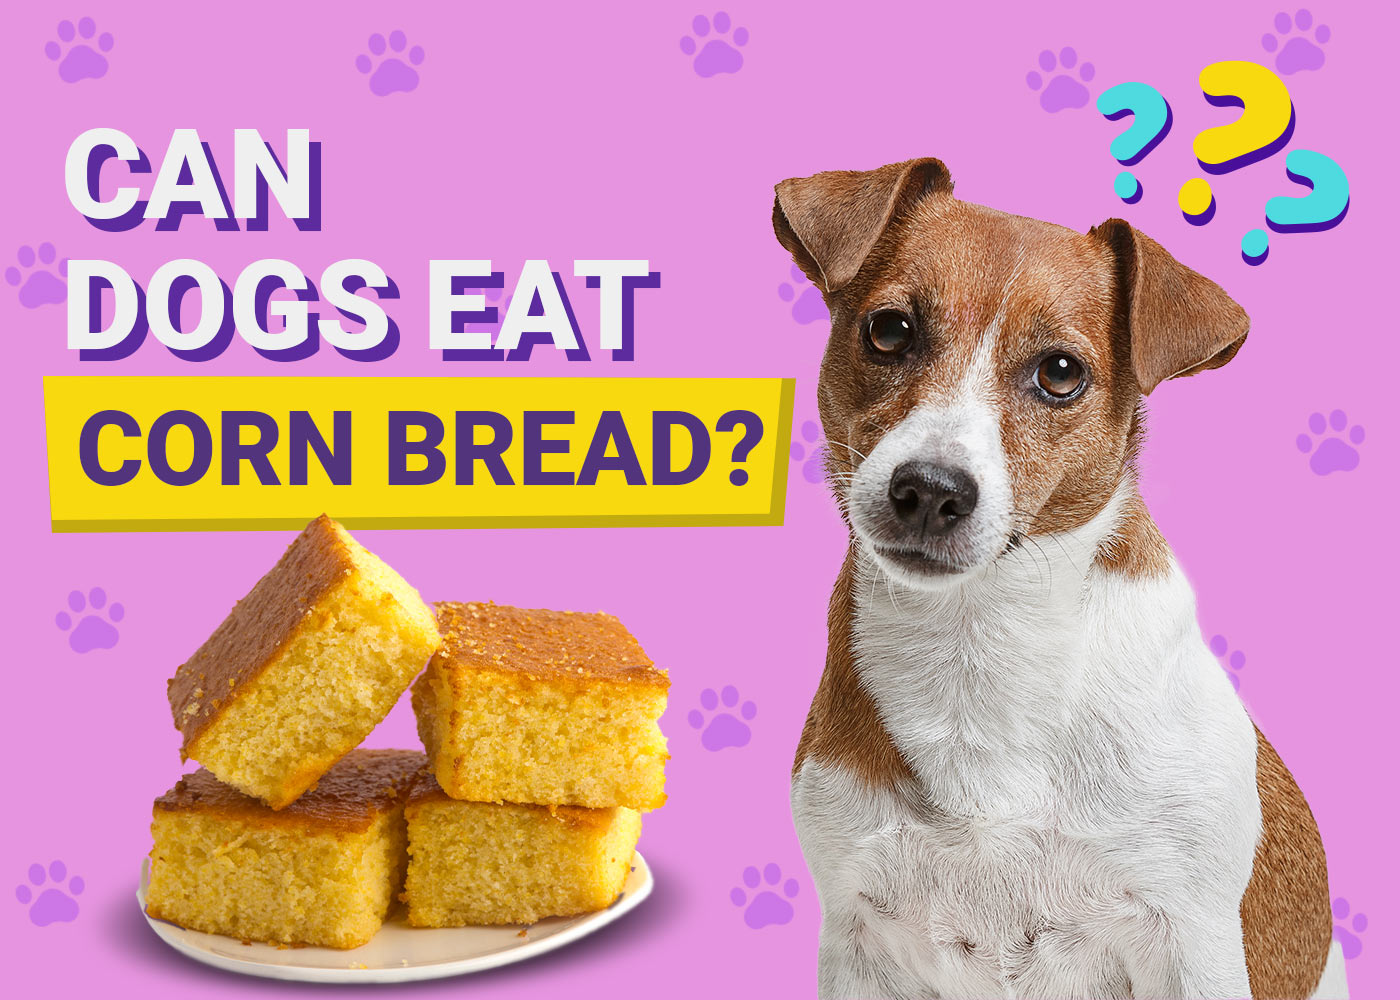 Can Dogs Eat Cornbread